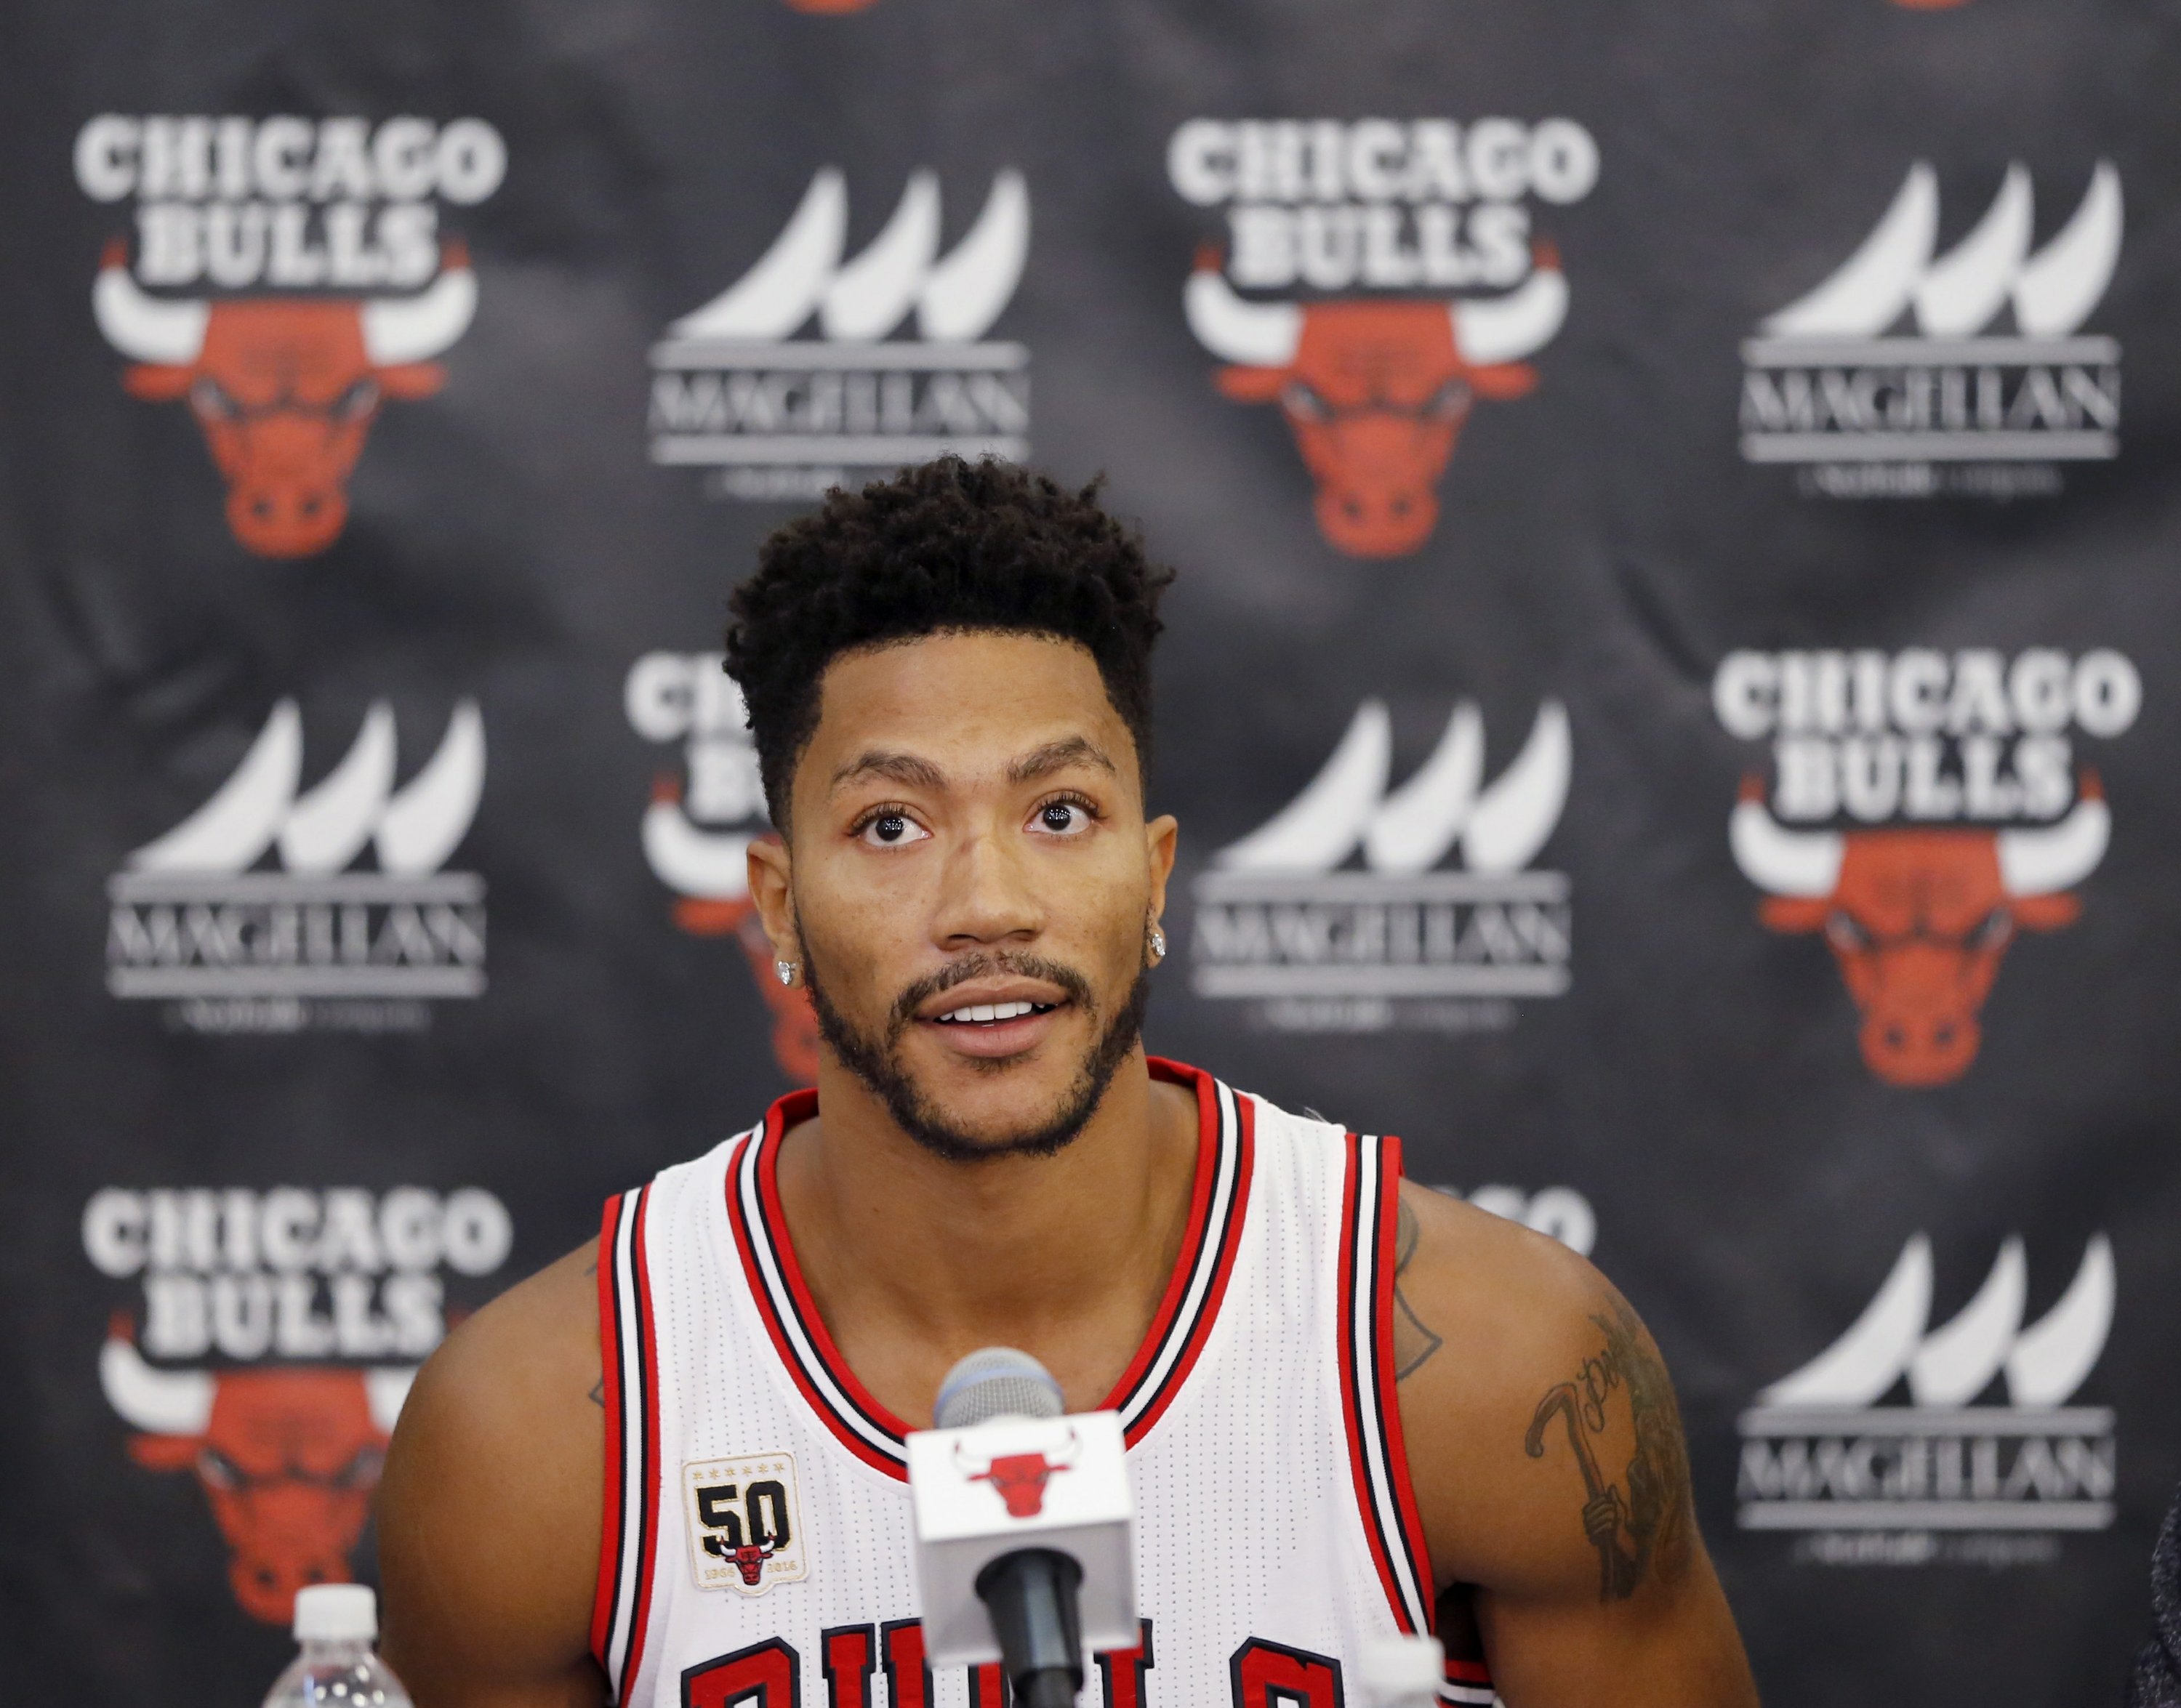 Betinget Mainstream Bliv overrasket Former NBA MVP Derrick Rose traded from Bulls to Knicks | AP News